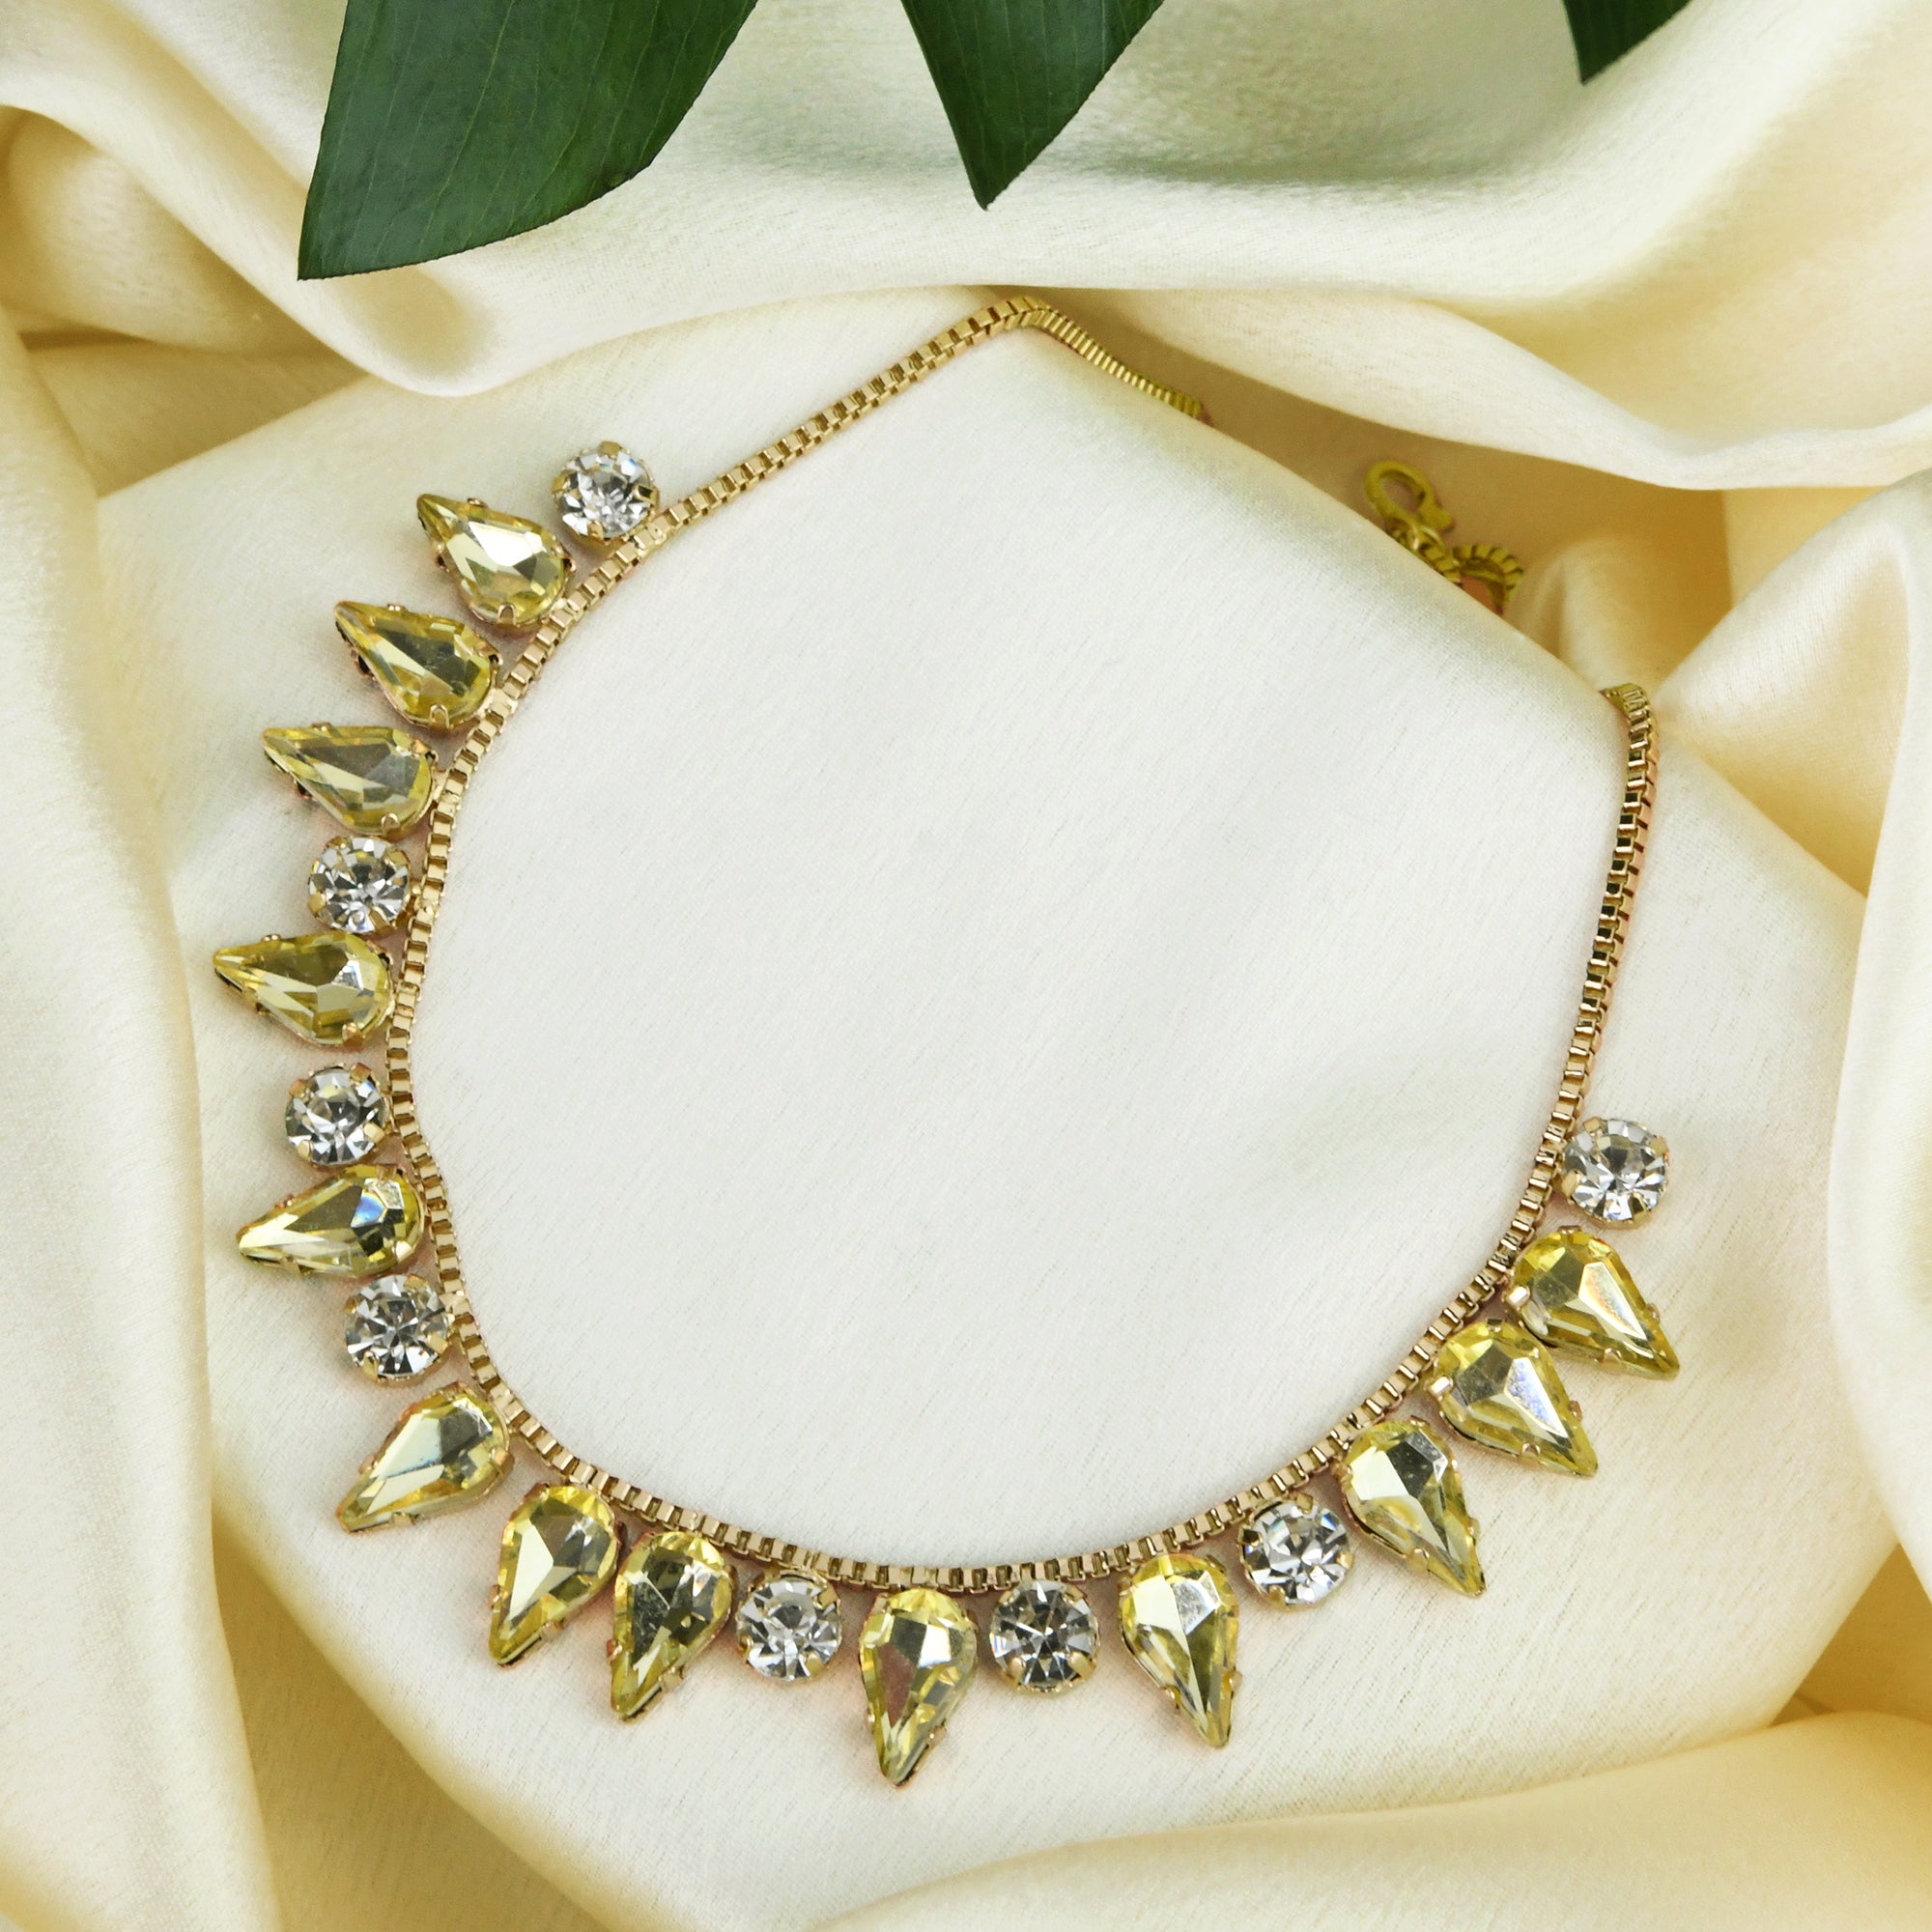 Accessorize London Women's Gold Crystal Teardrop Collar Necklace